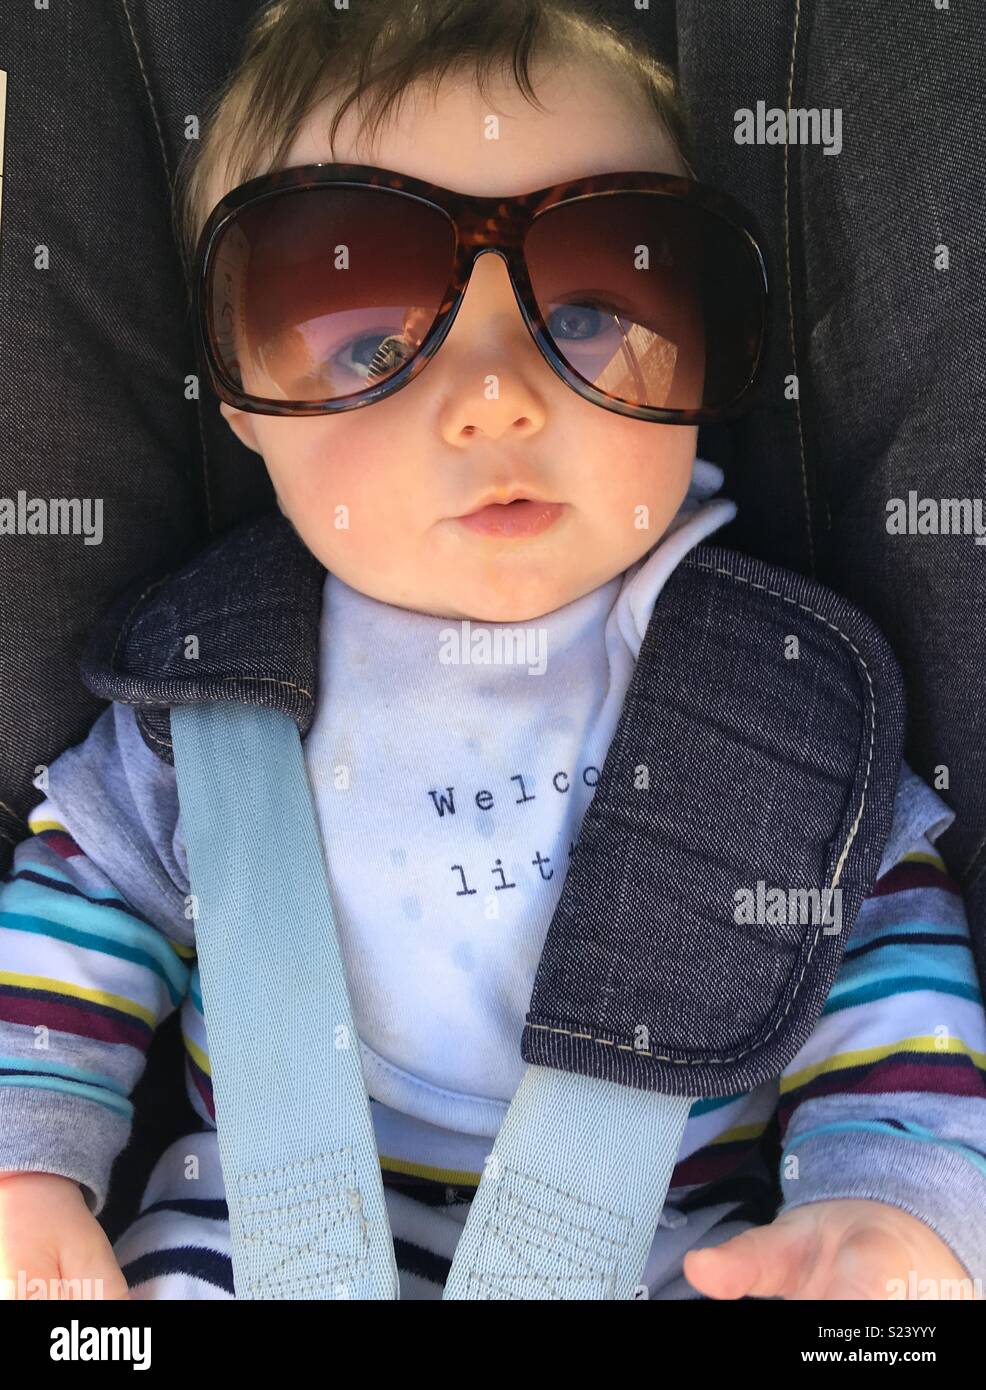 Baby in sunglasses Stock Photo